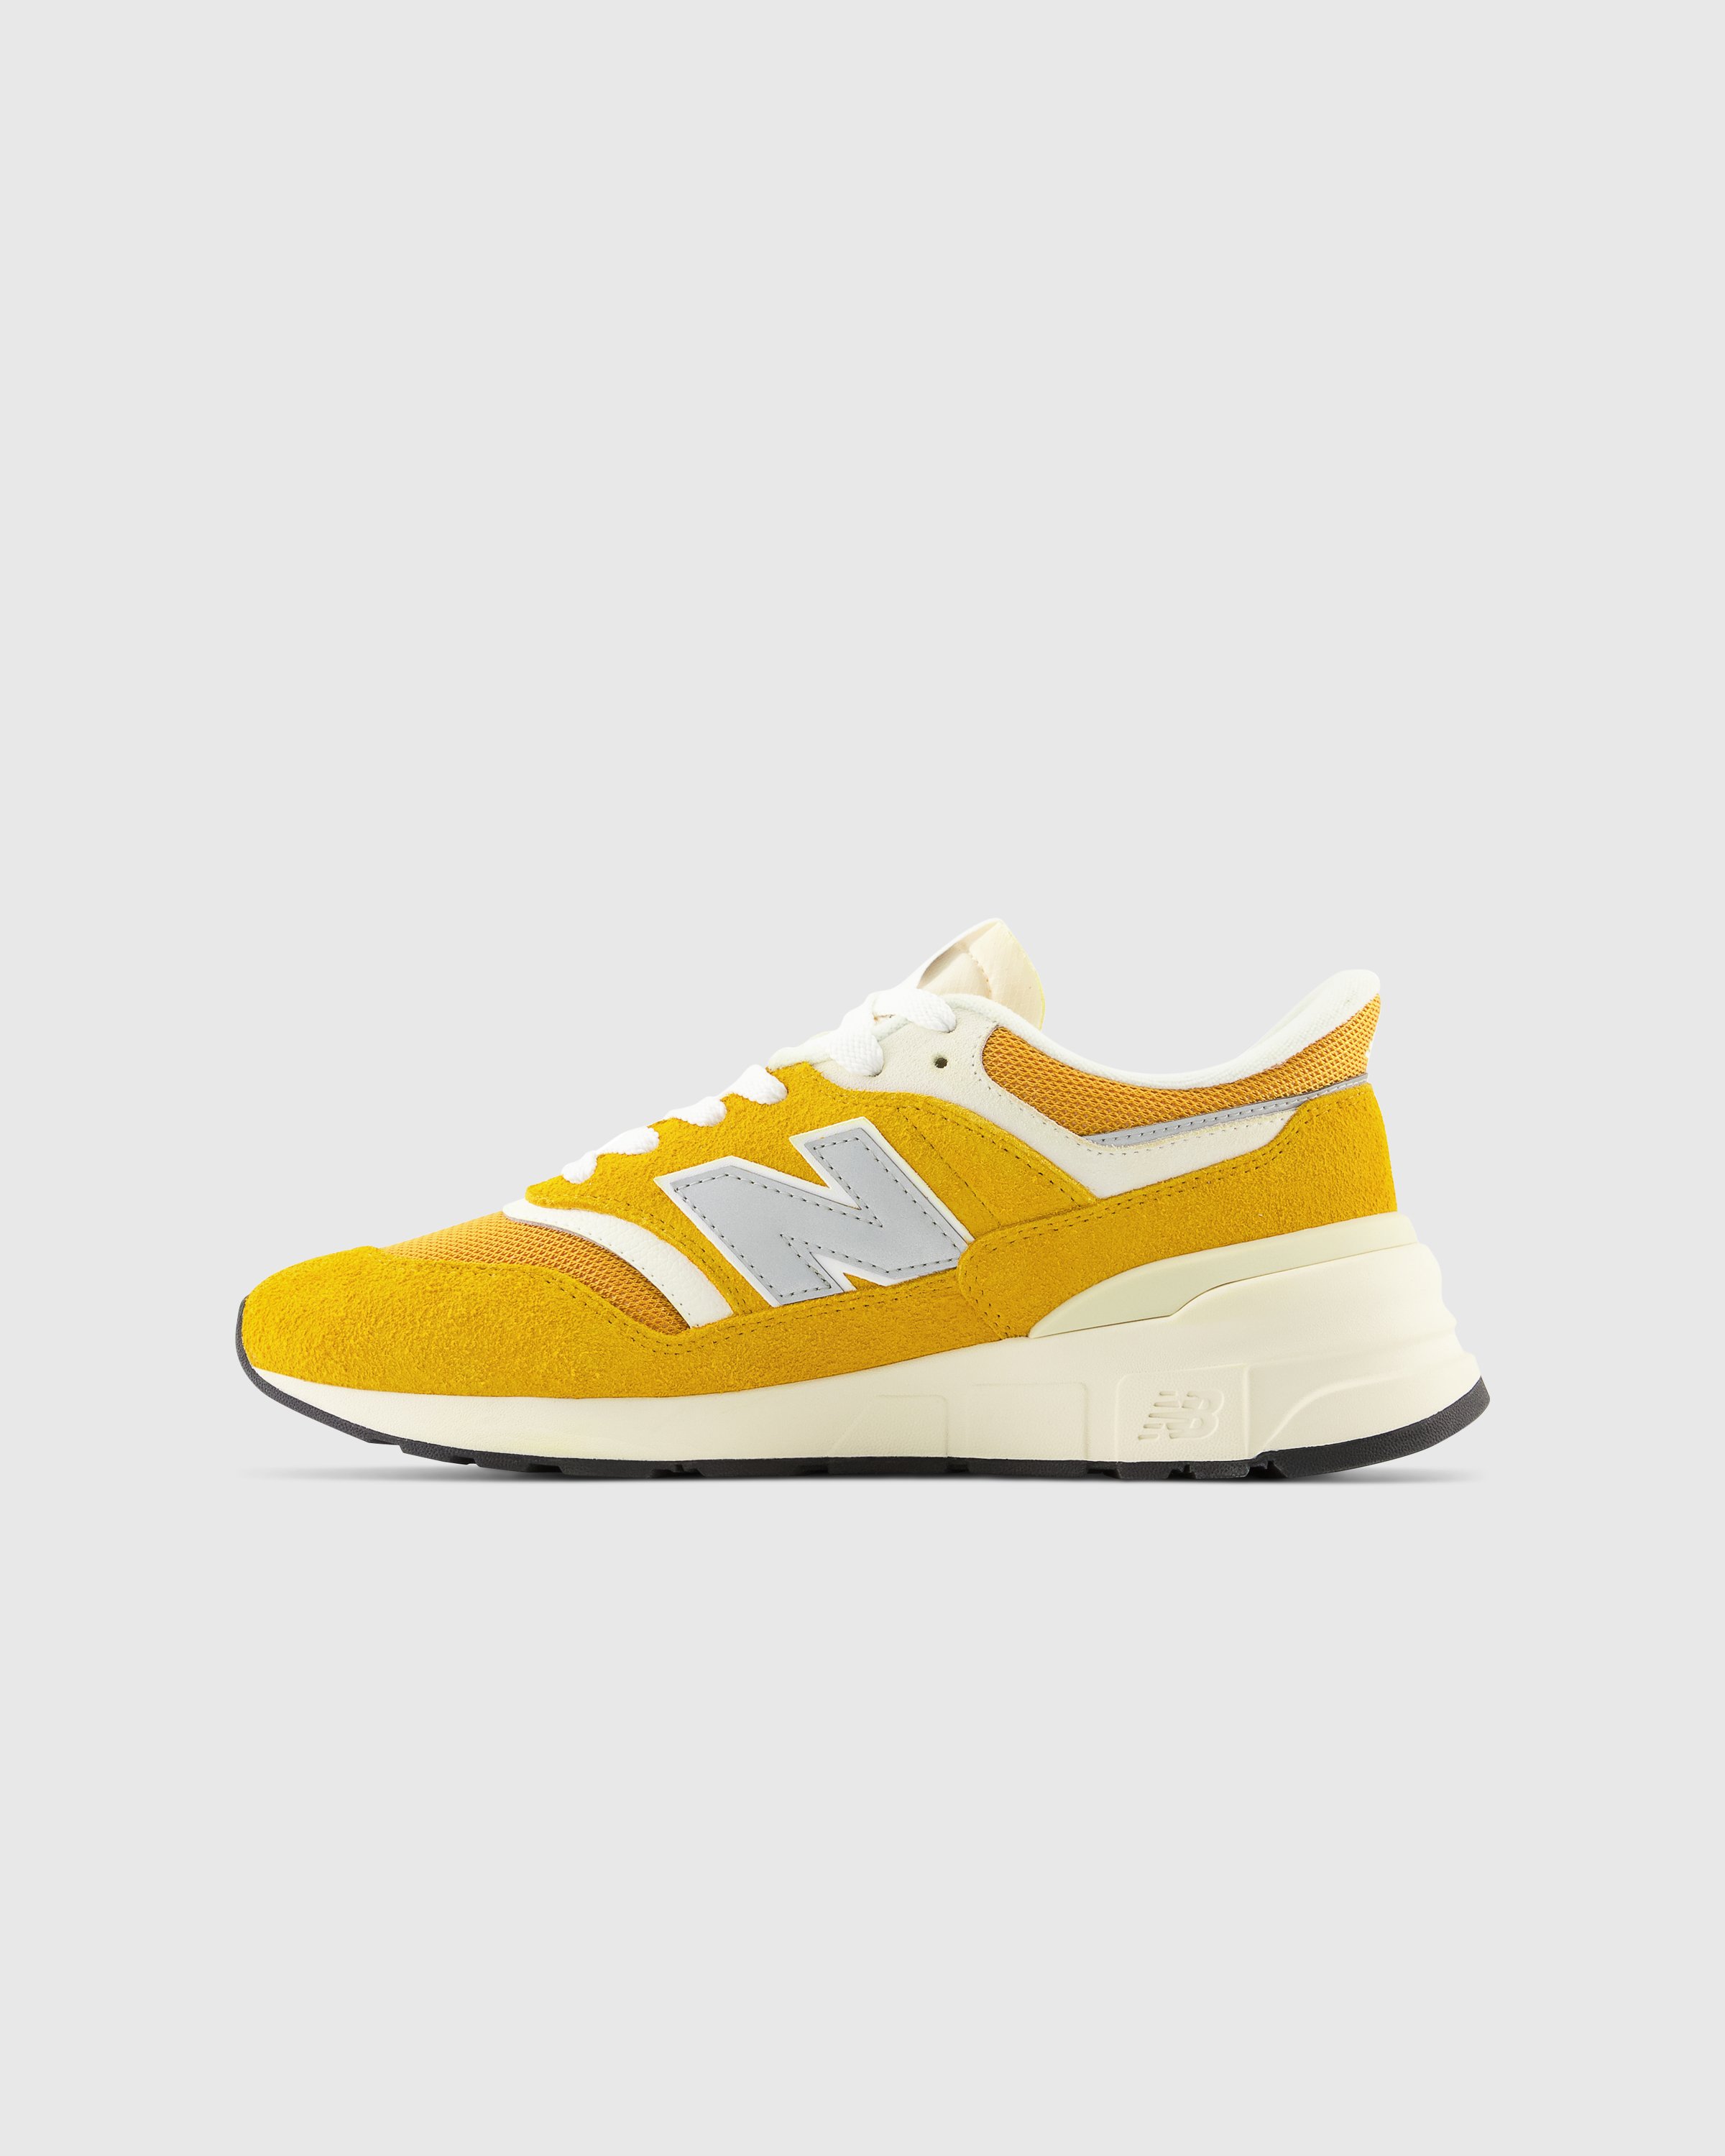 New Balance - U 997R CB Varsity Gold - Footwear - Yellow - Image 2